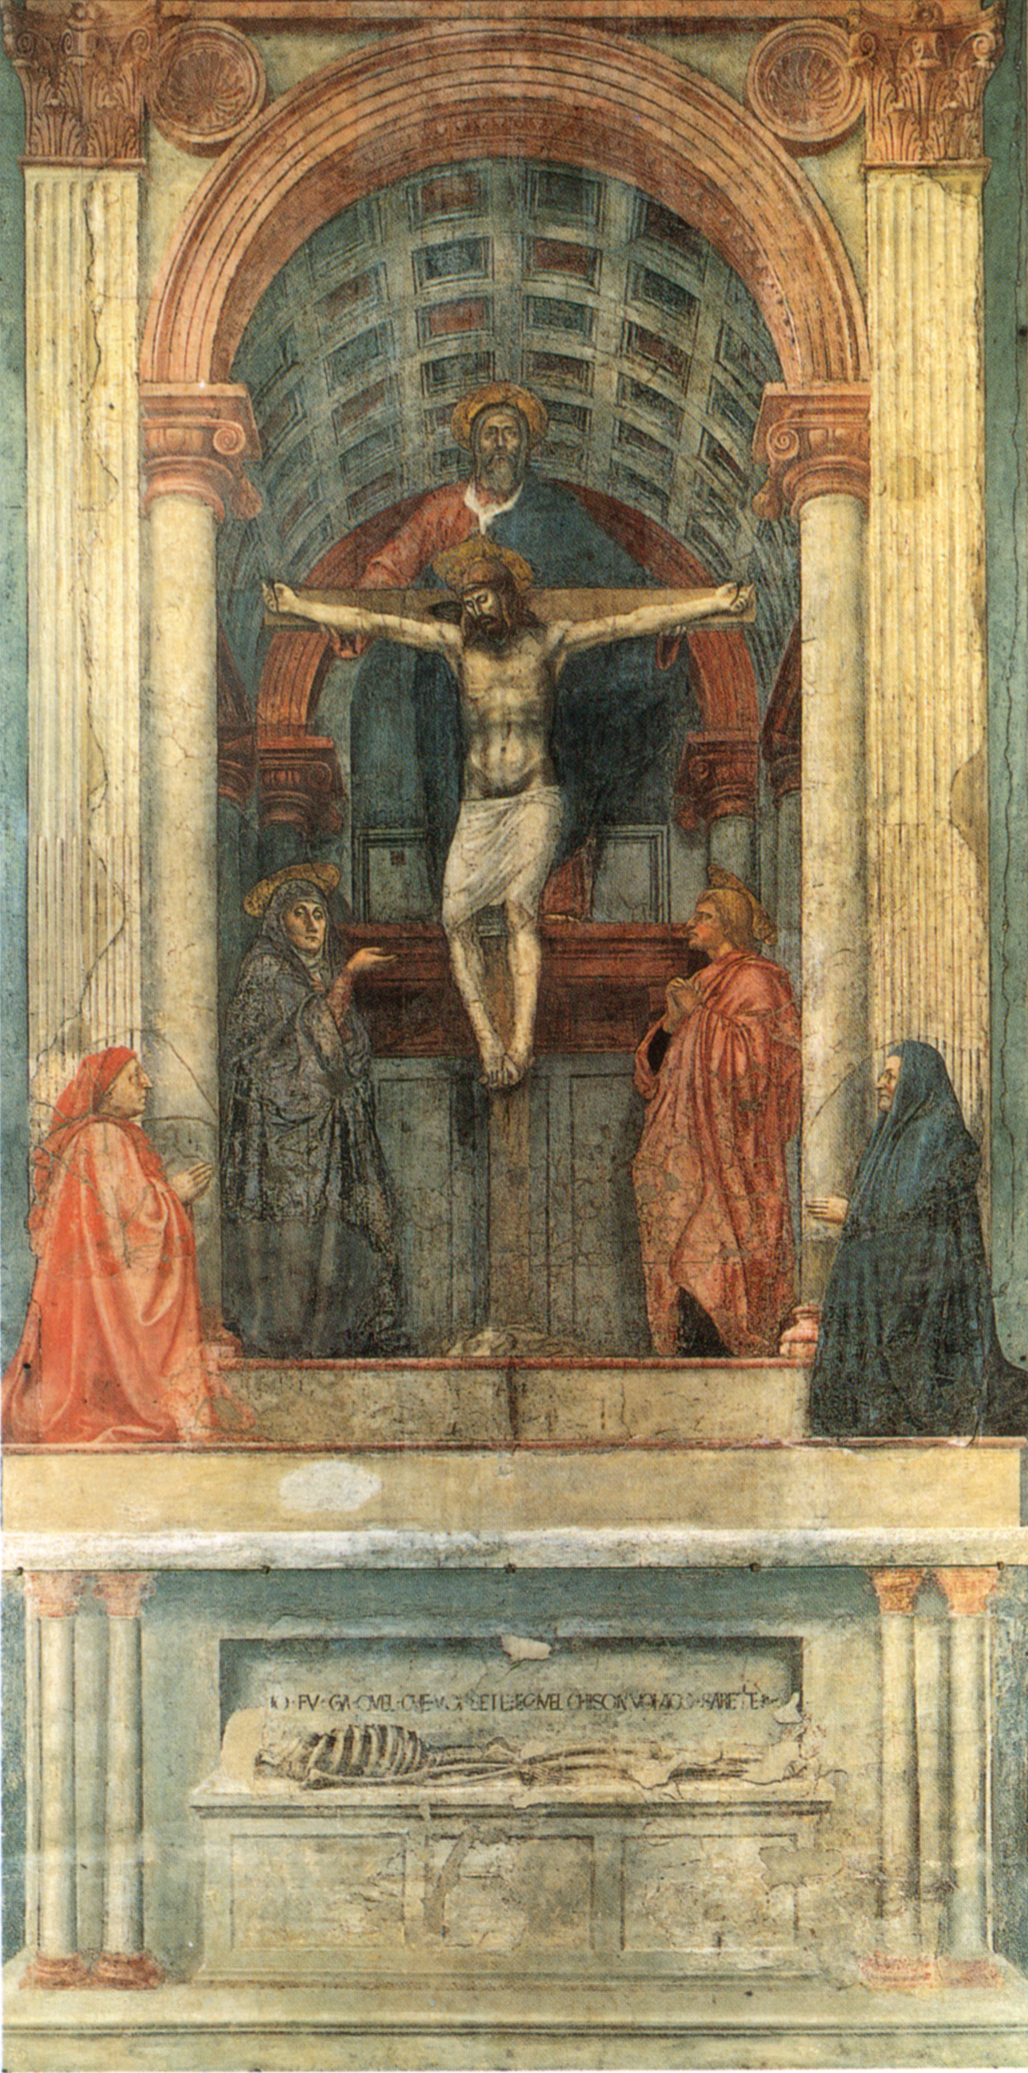 http://upload.wikimedia.org/wikipedia/commons/d/d2/Masaccio,_trinit%C3%A0.jpg